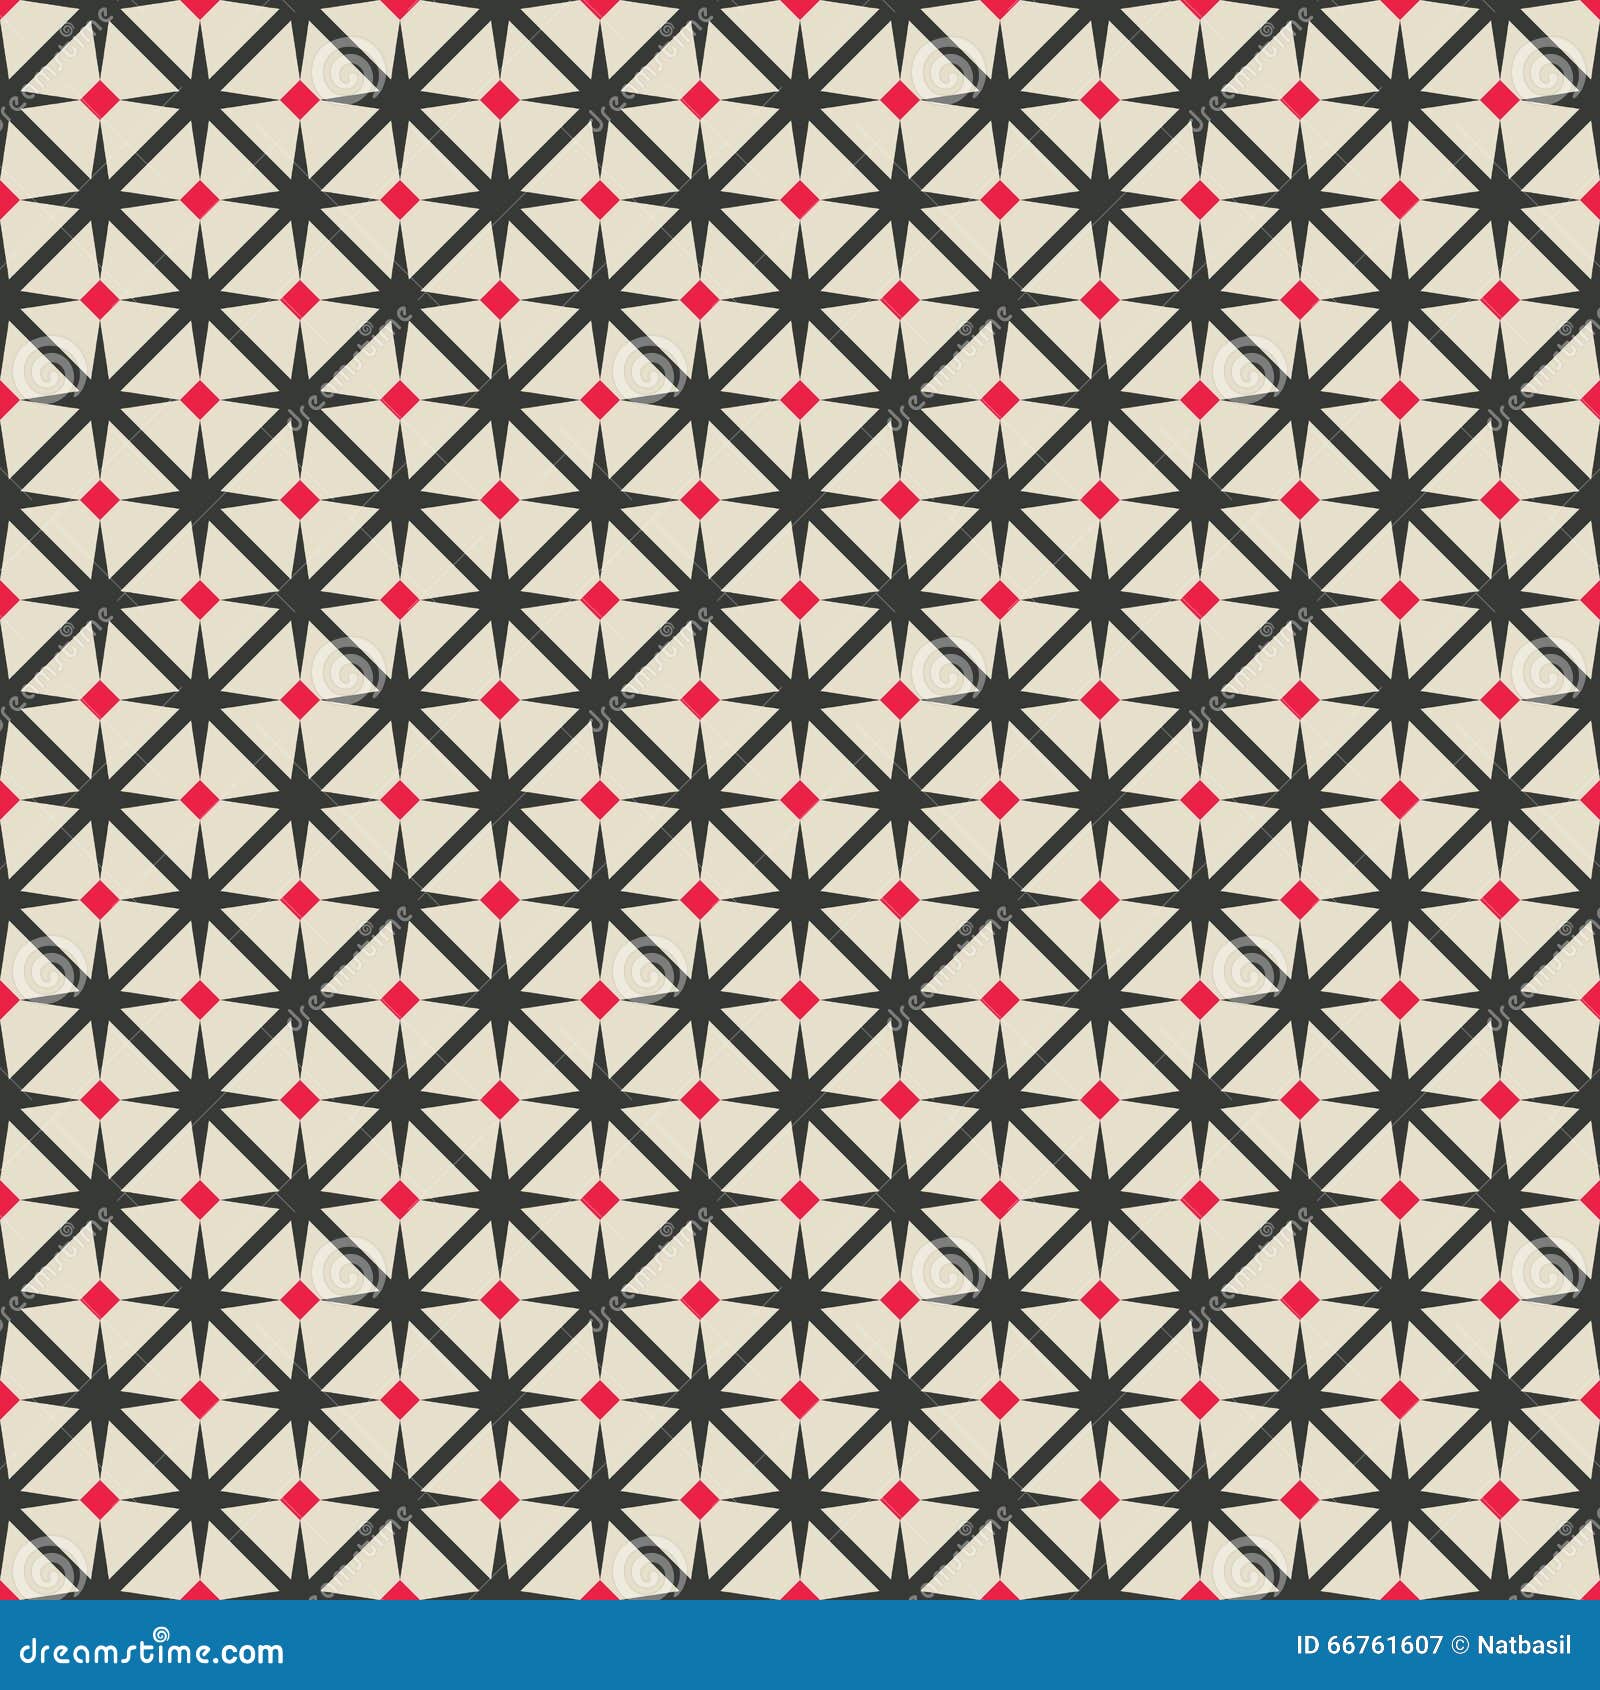 black and red rhombus seamless geometric pattern